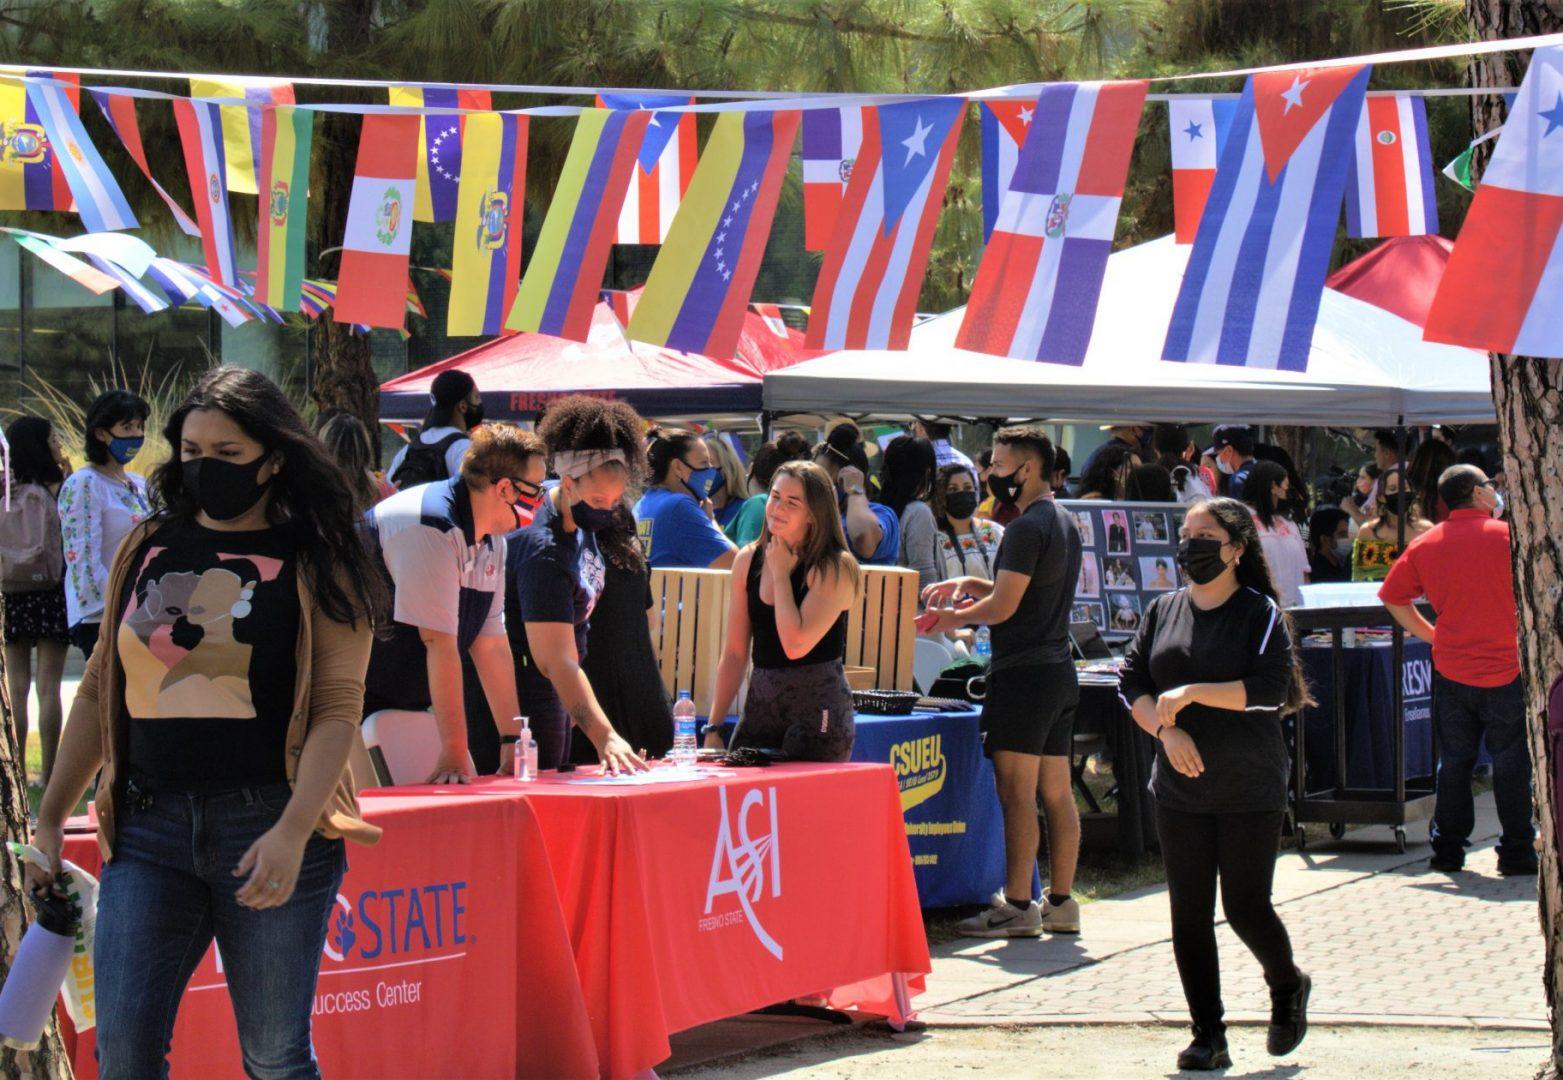 Student clubs and organizations were tabling at the La Bienvenida event on Sept. 16. (Miranda Adams/The Collegian)